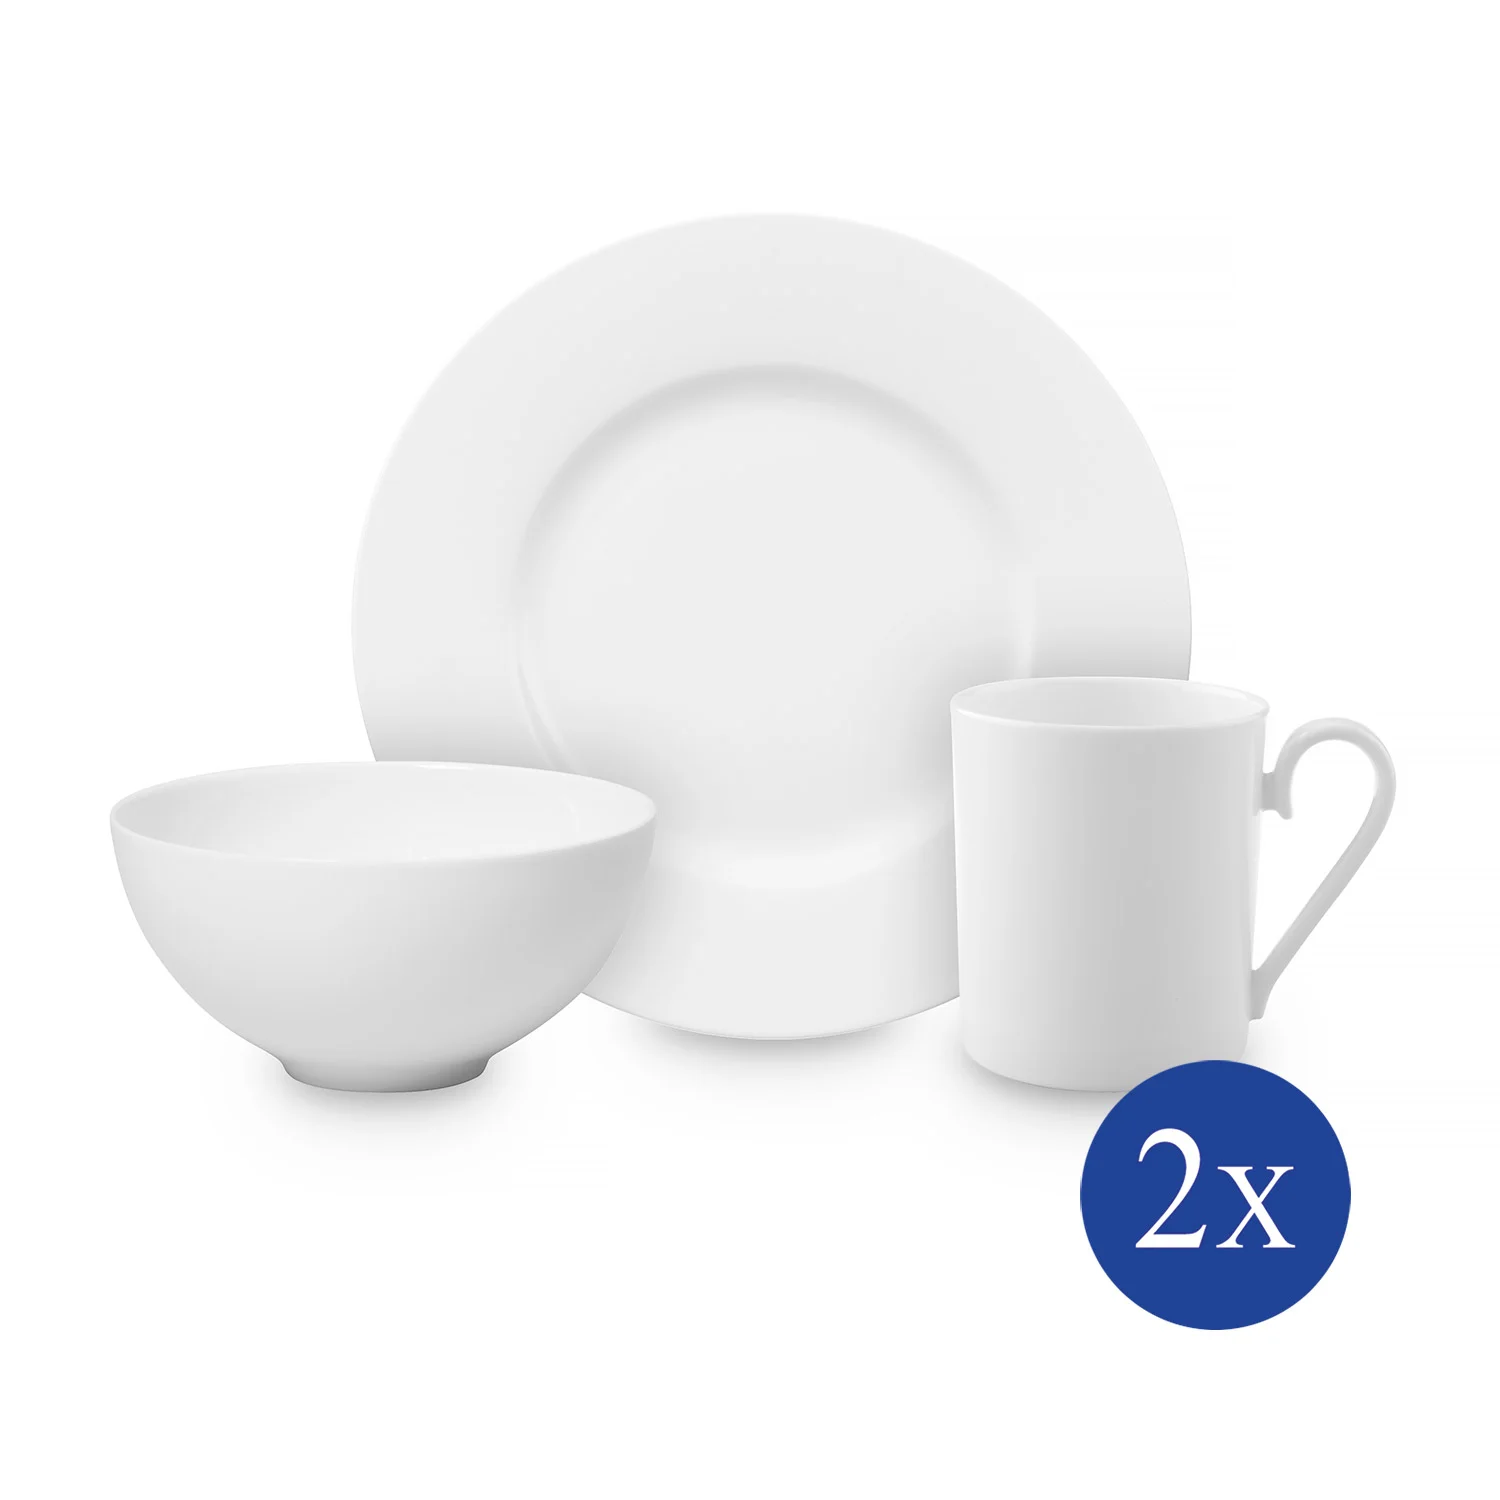 Royal Набор посуды на 2 персоны, 6 предметов